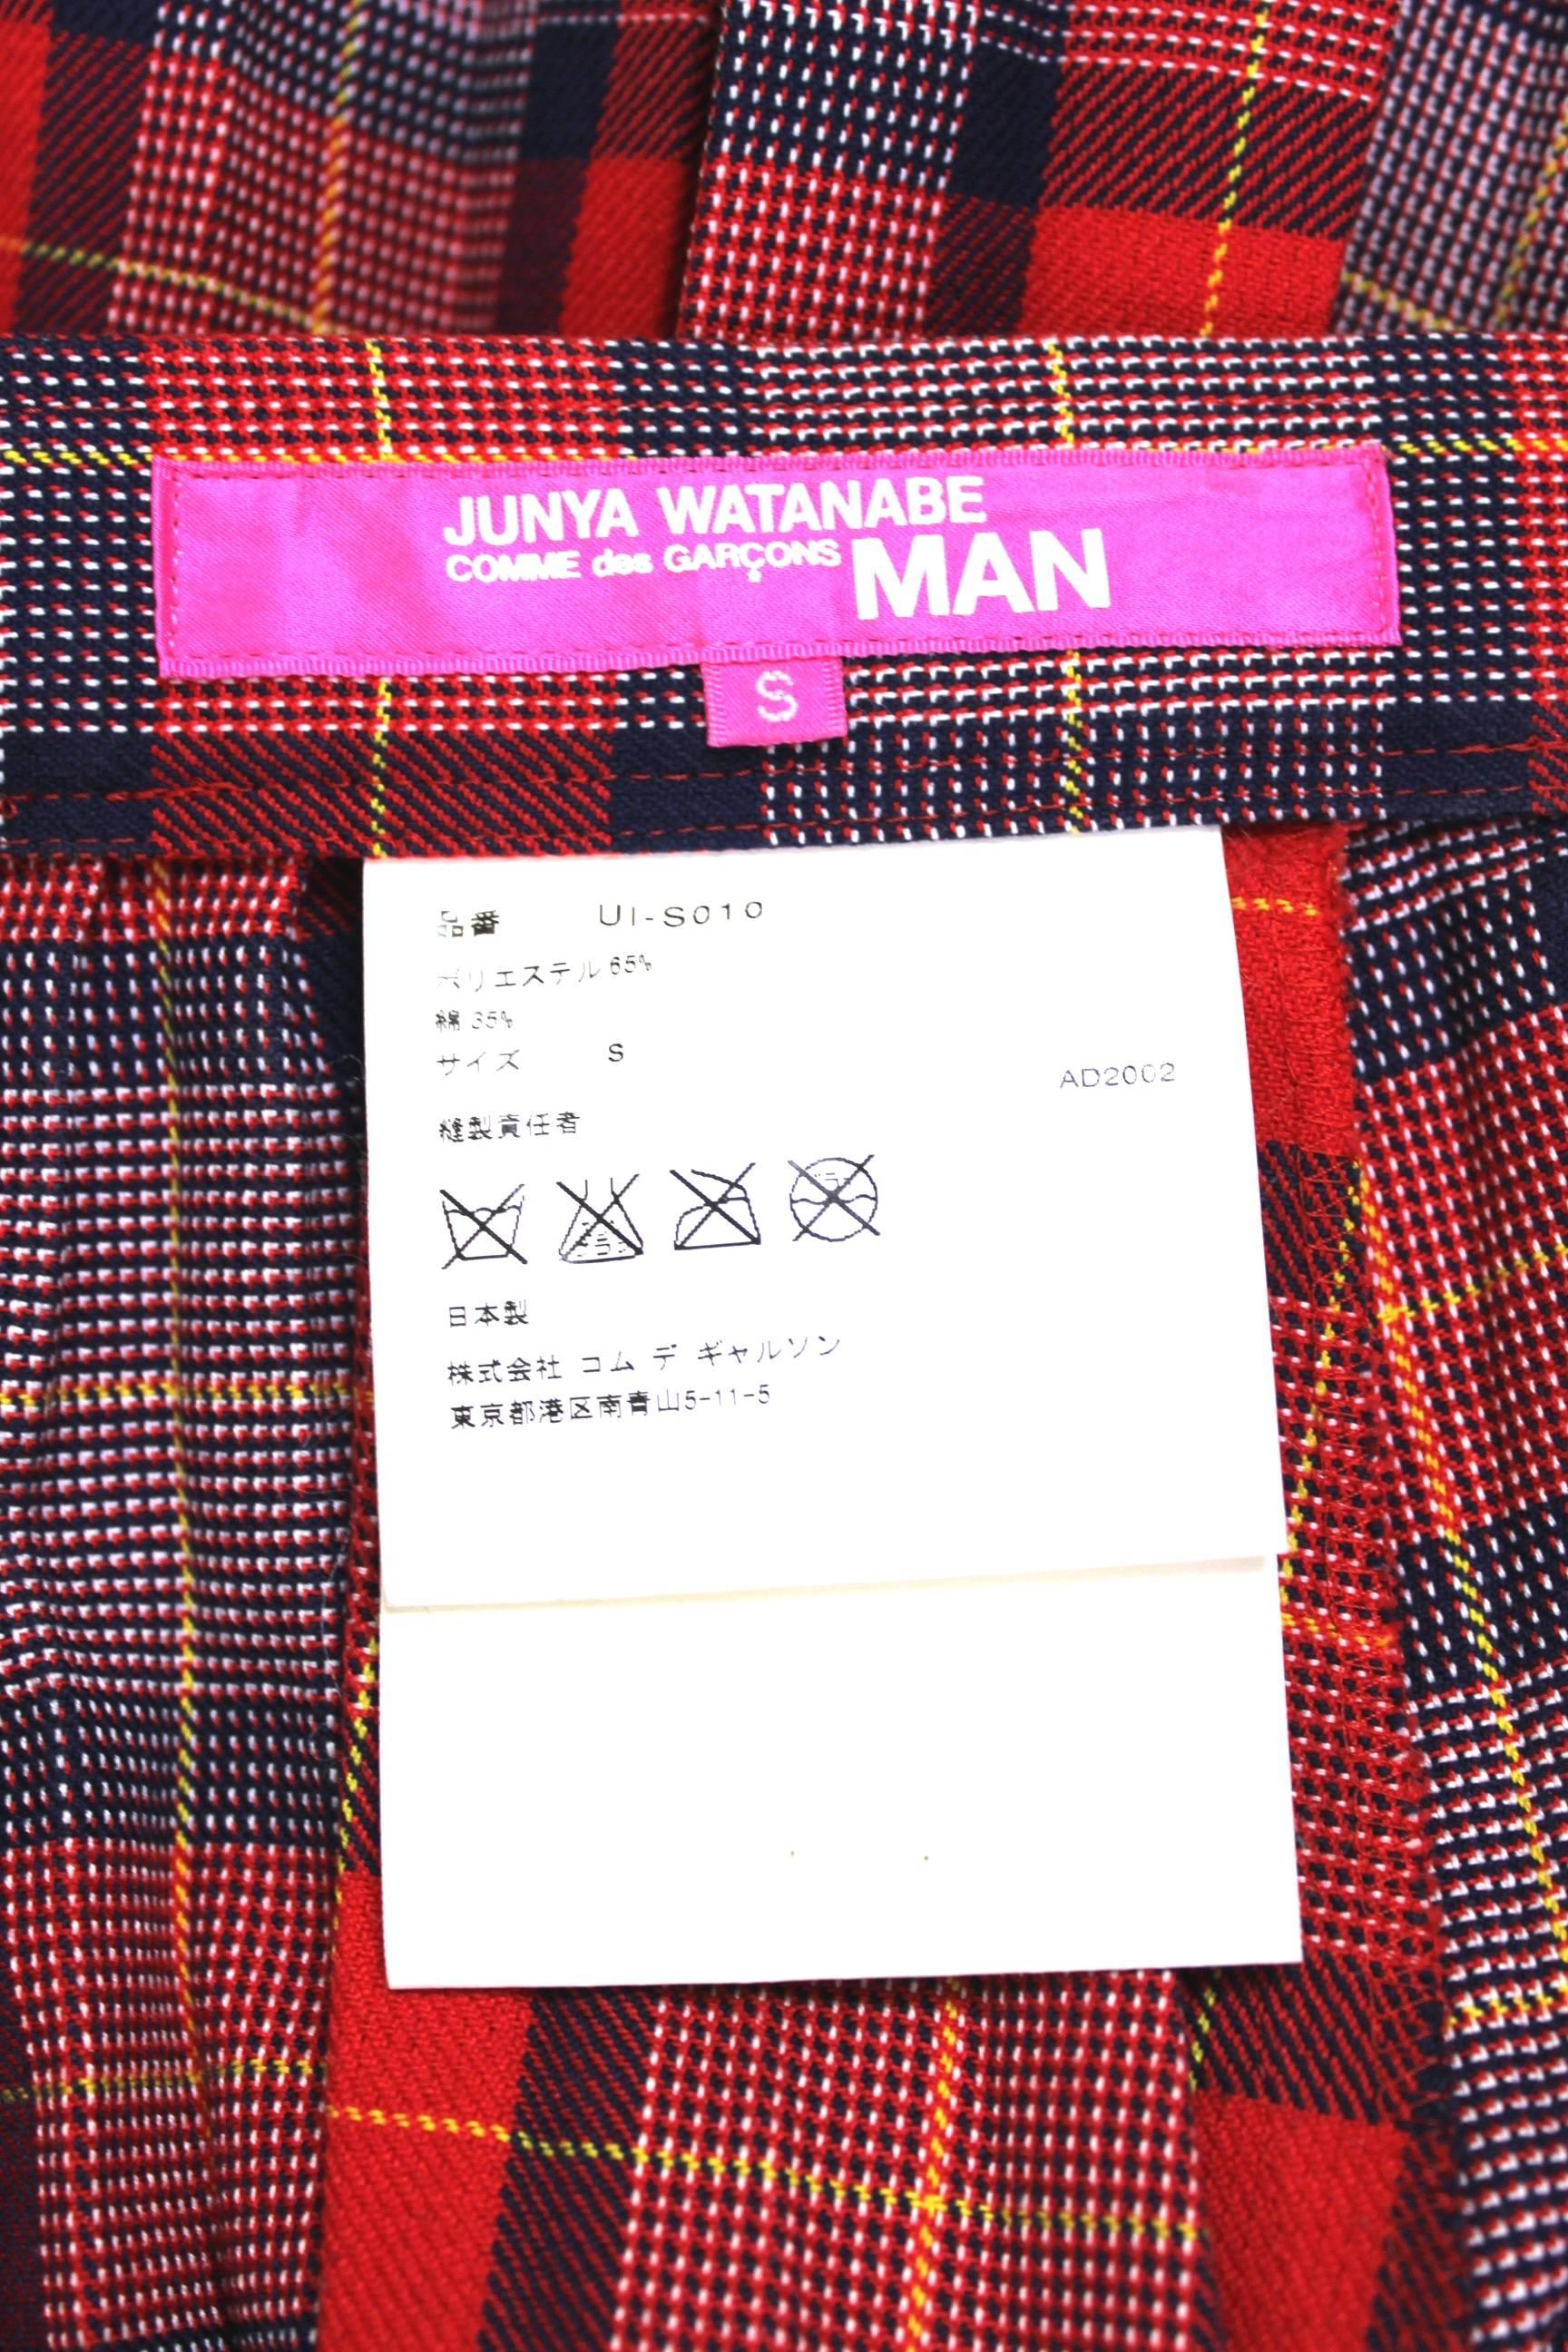 Junya Watanabe Man AD 2002 Punk Kilt with Metal Chains 5